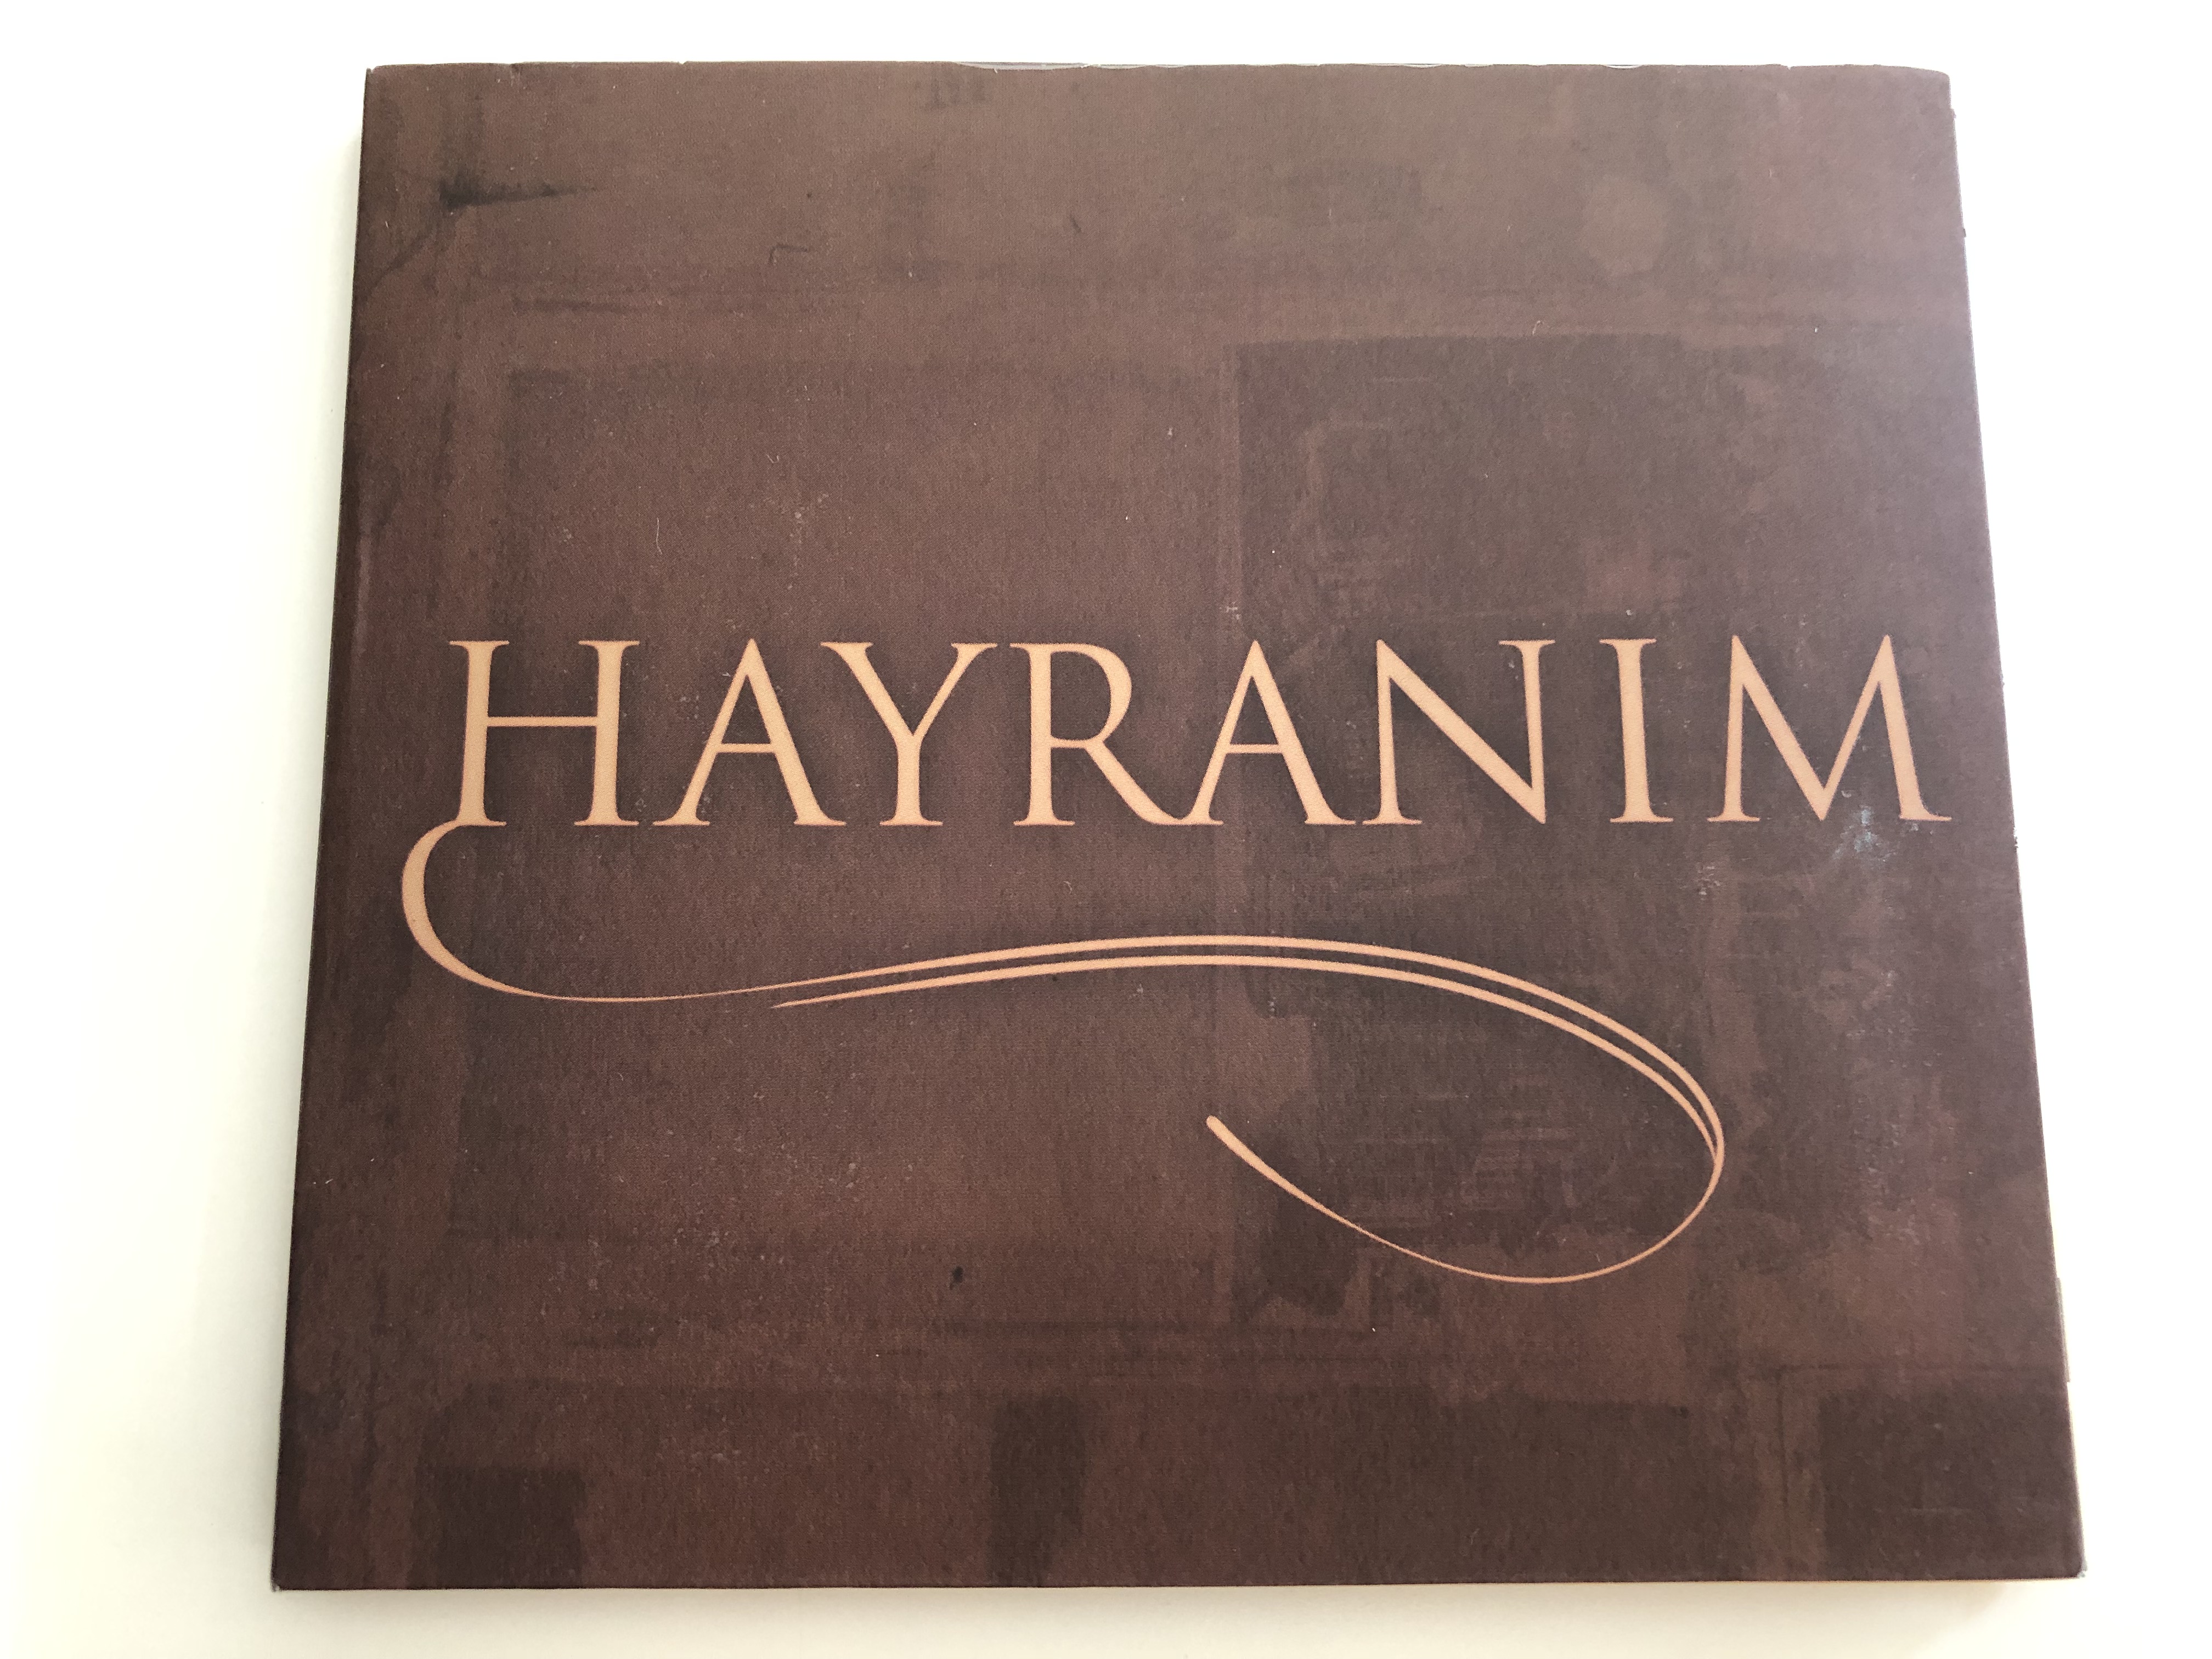 hayranim-gelin-bakin-rab-iyidir-d-nya-dolsun-davut-un-duasi-inanirim-turkish-language-christian-praise-and-worship-audio-cd-2014-1-.jpg